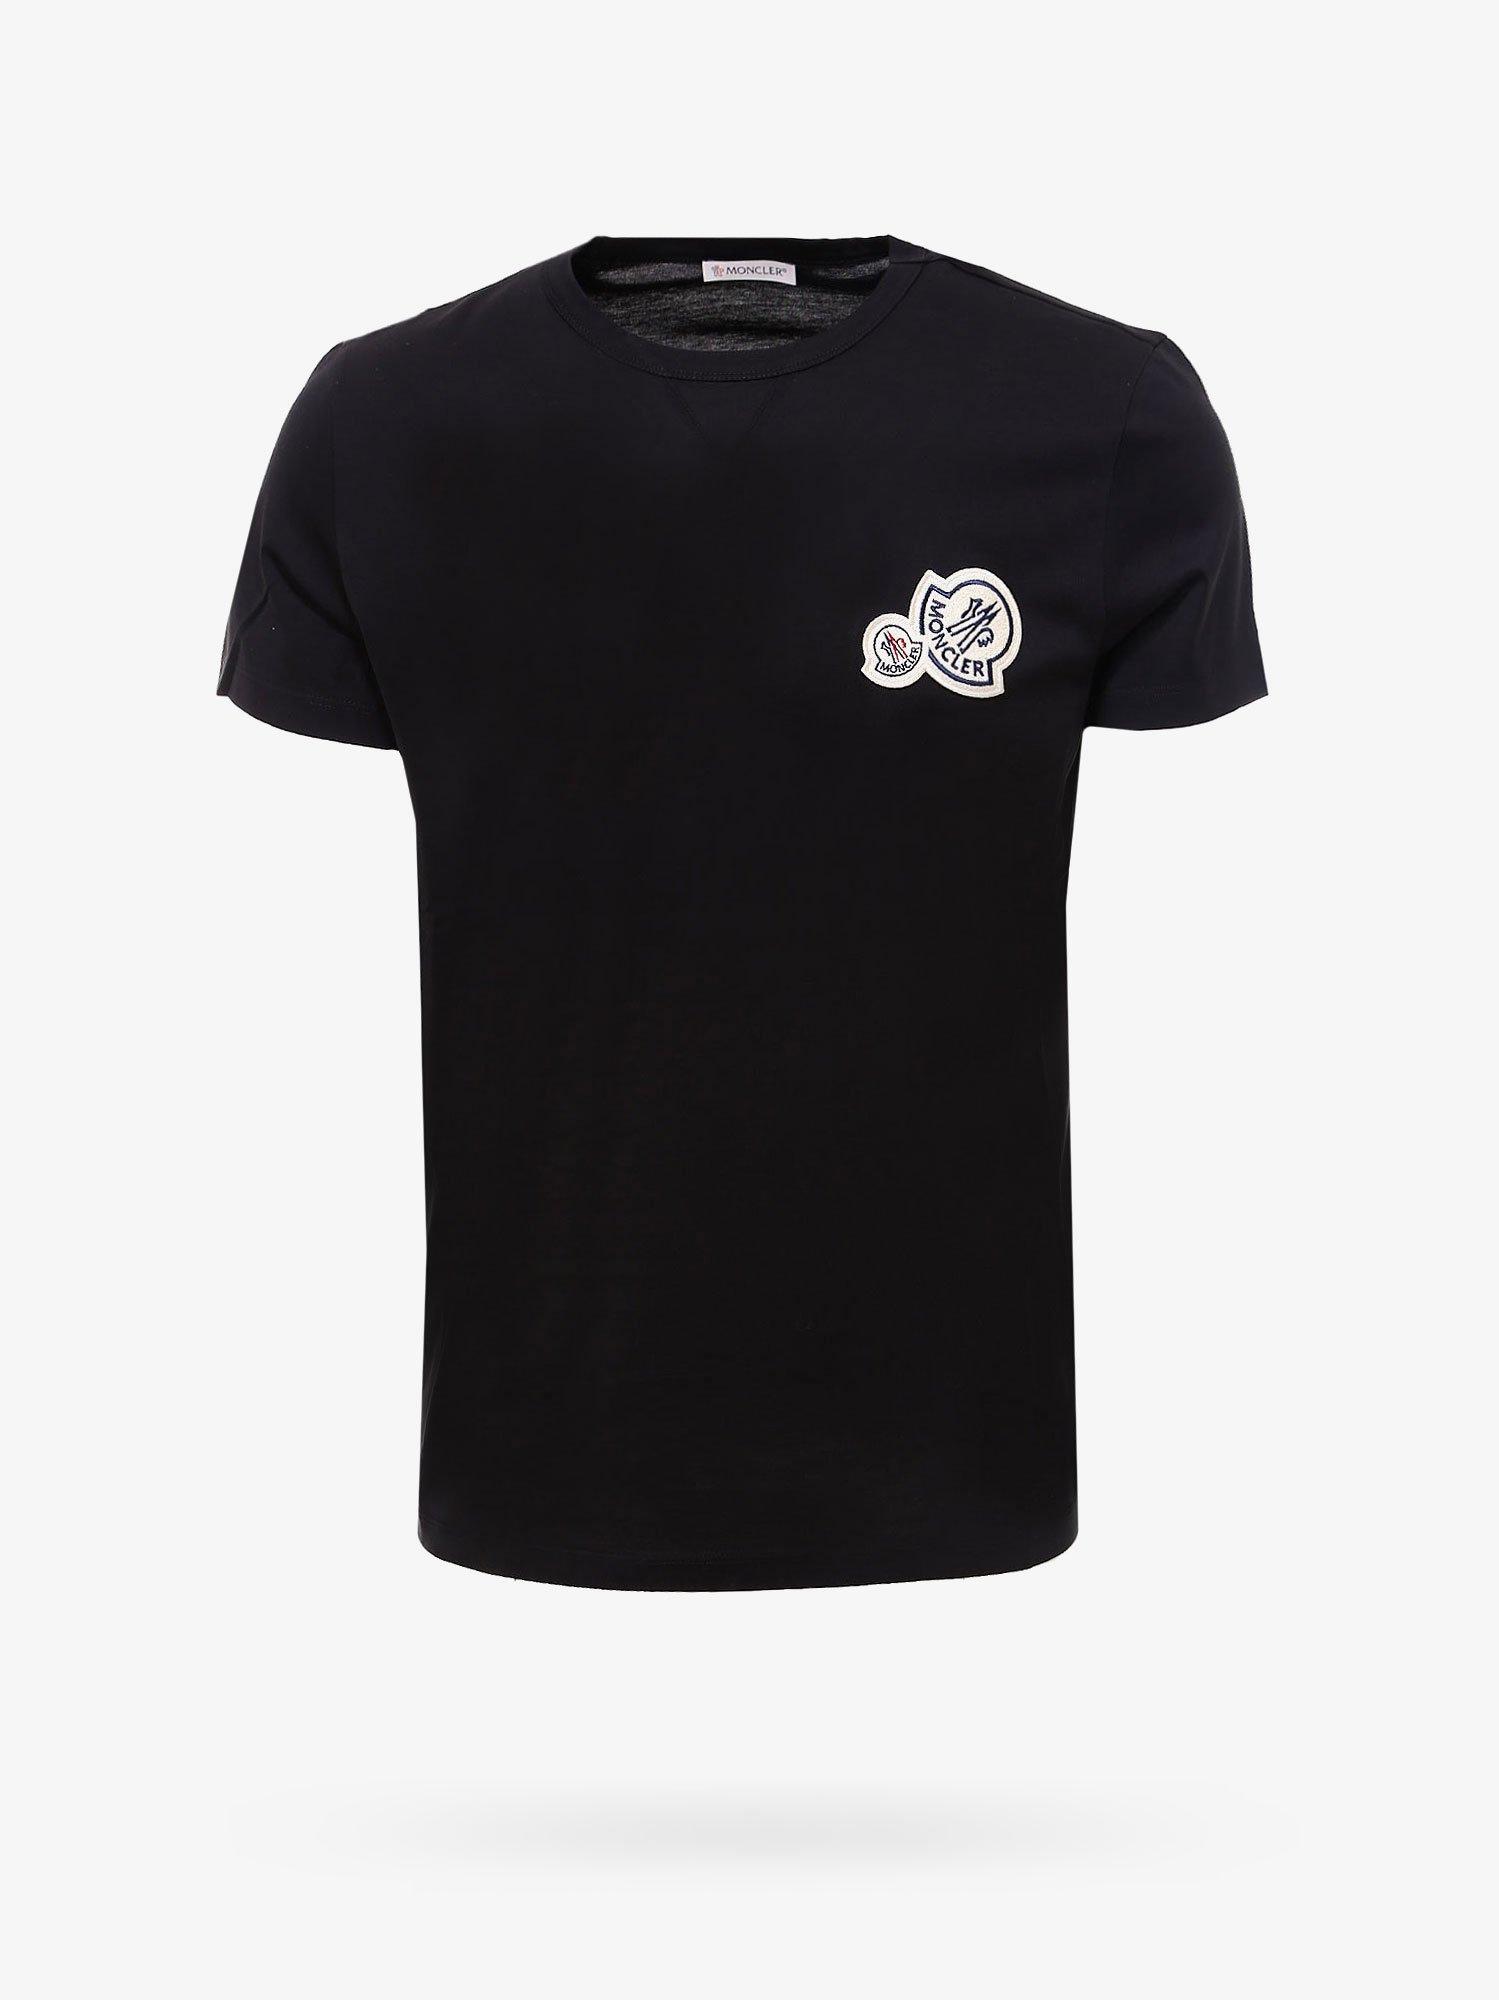 Moncler Cotton T-shirt in Black for Men - Lyst